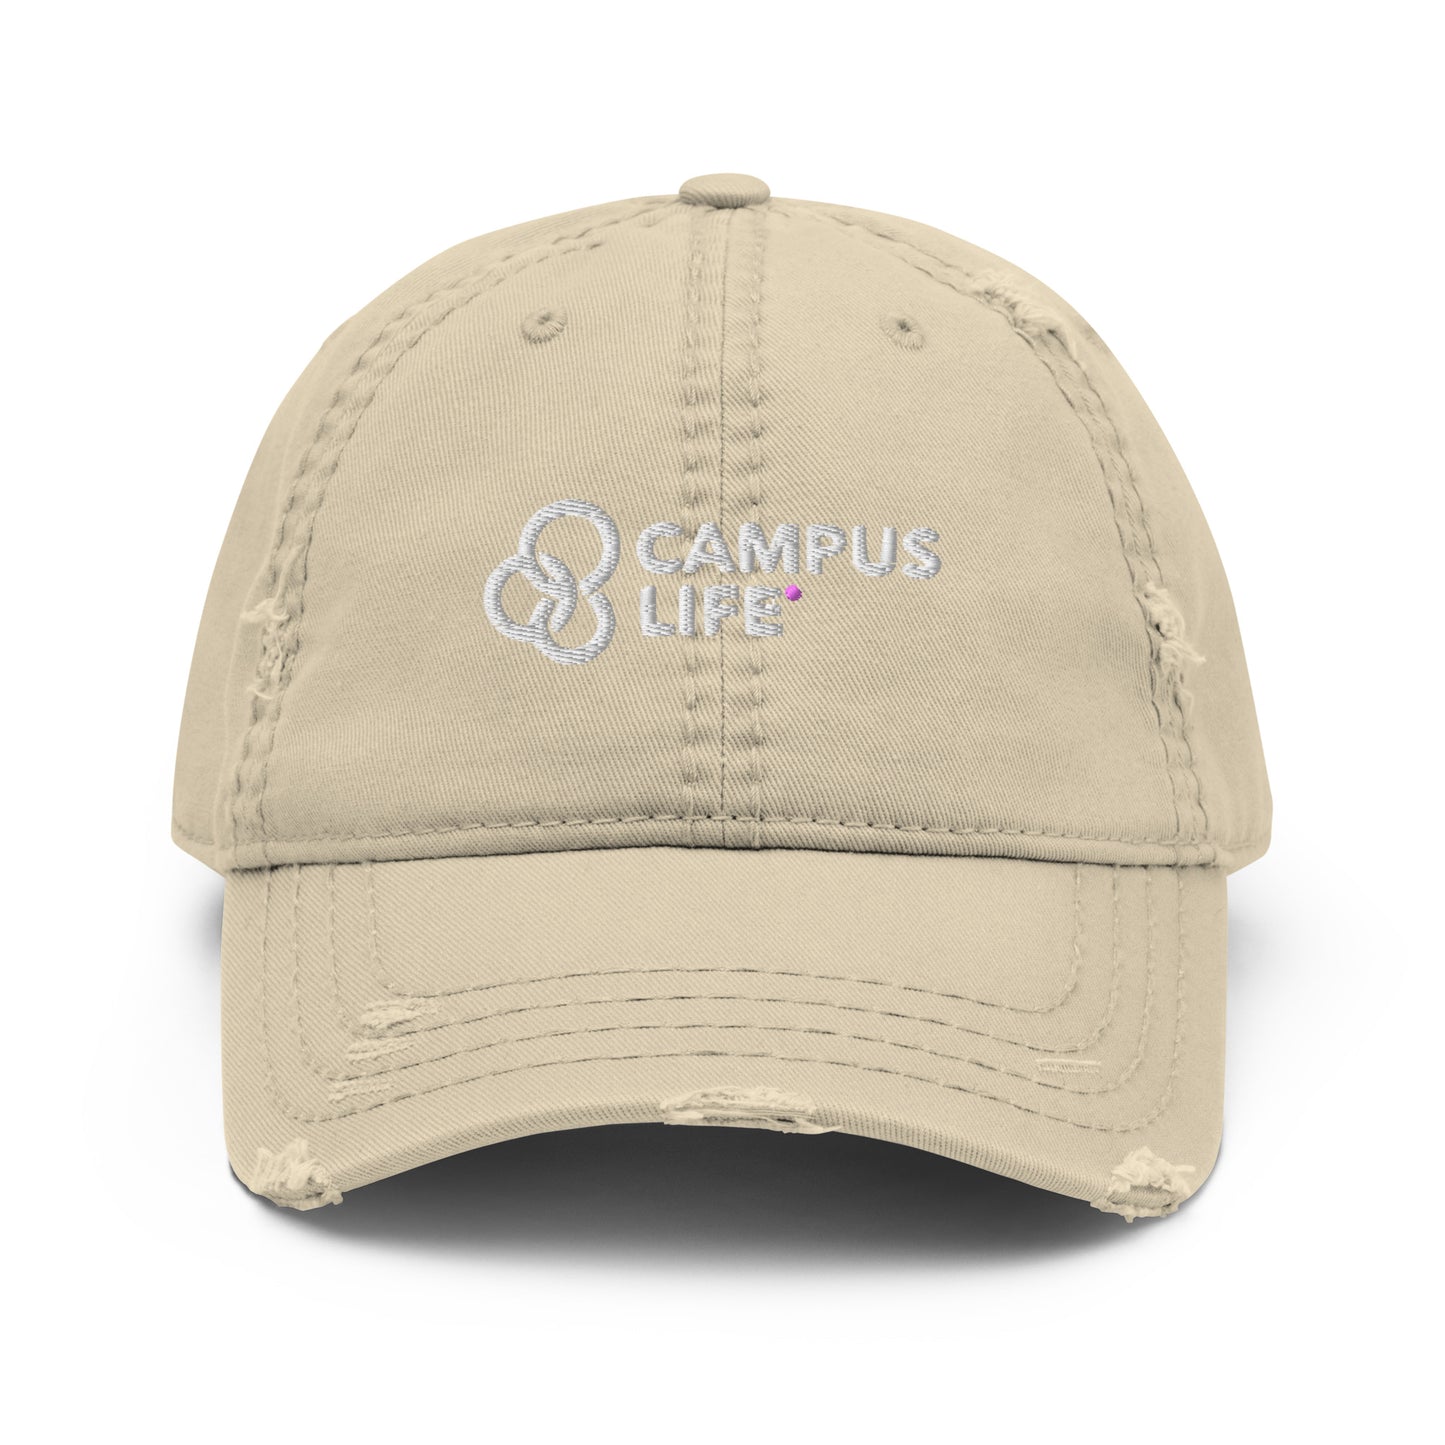 Campus Life Distressed Dad Hat